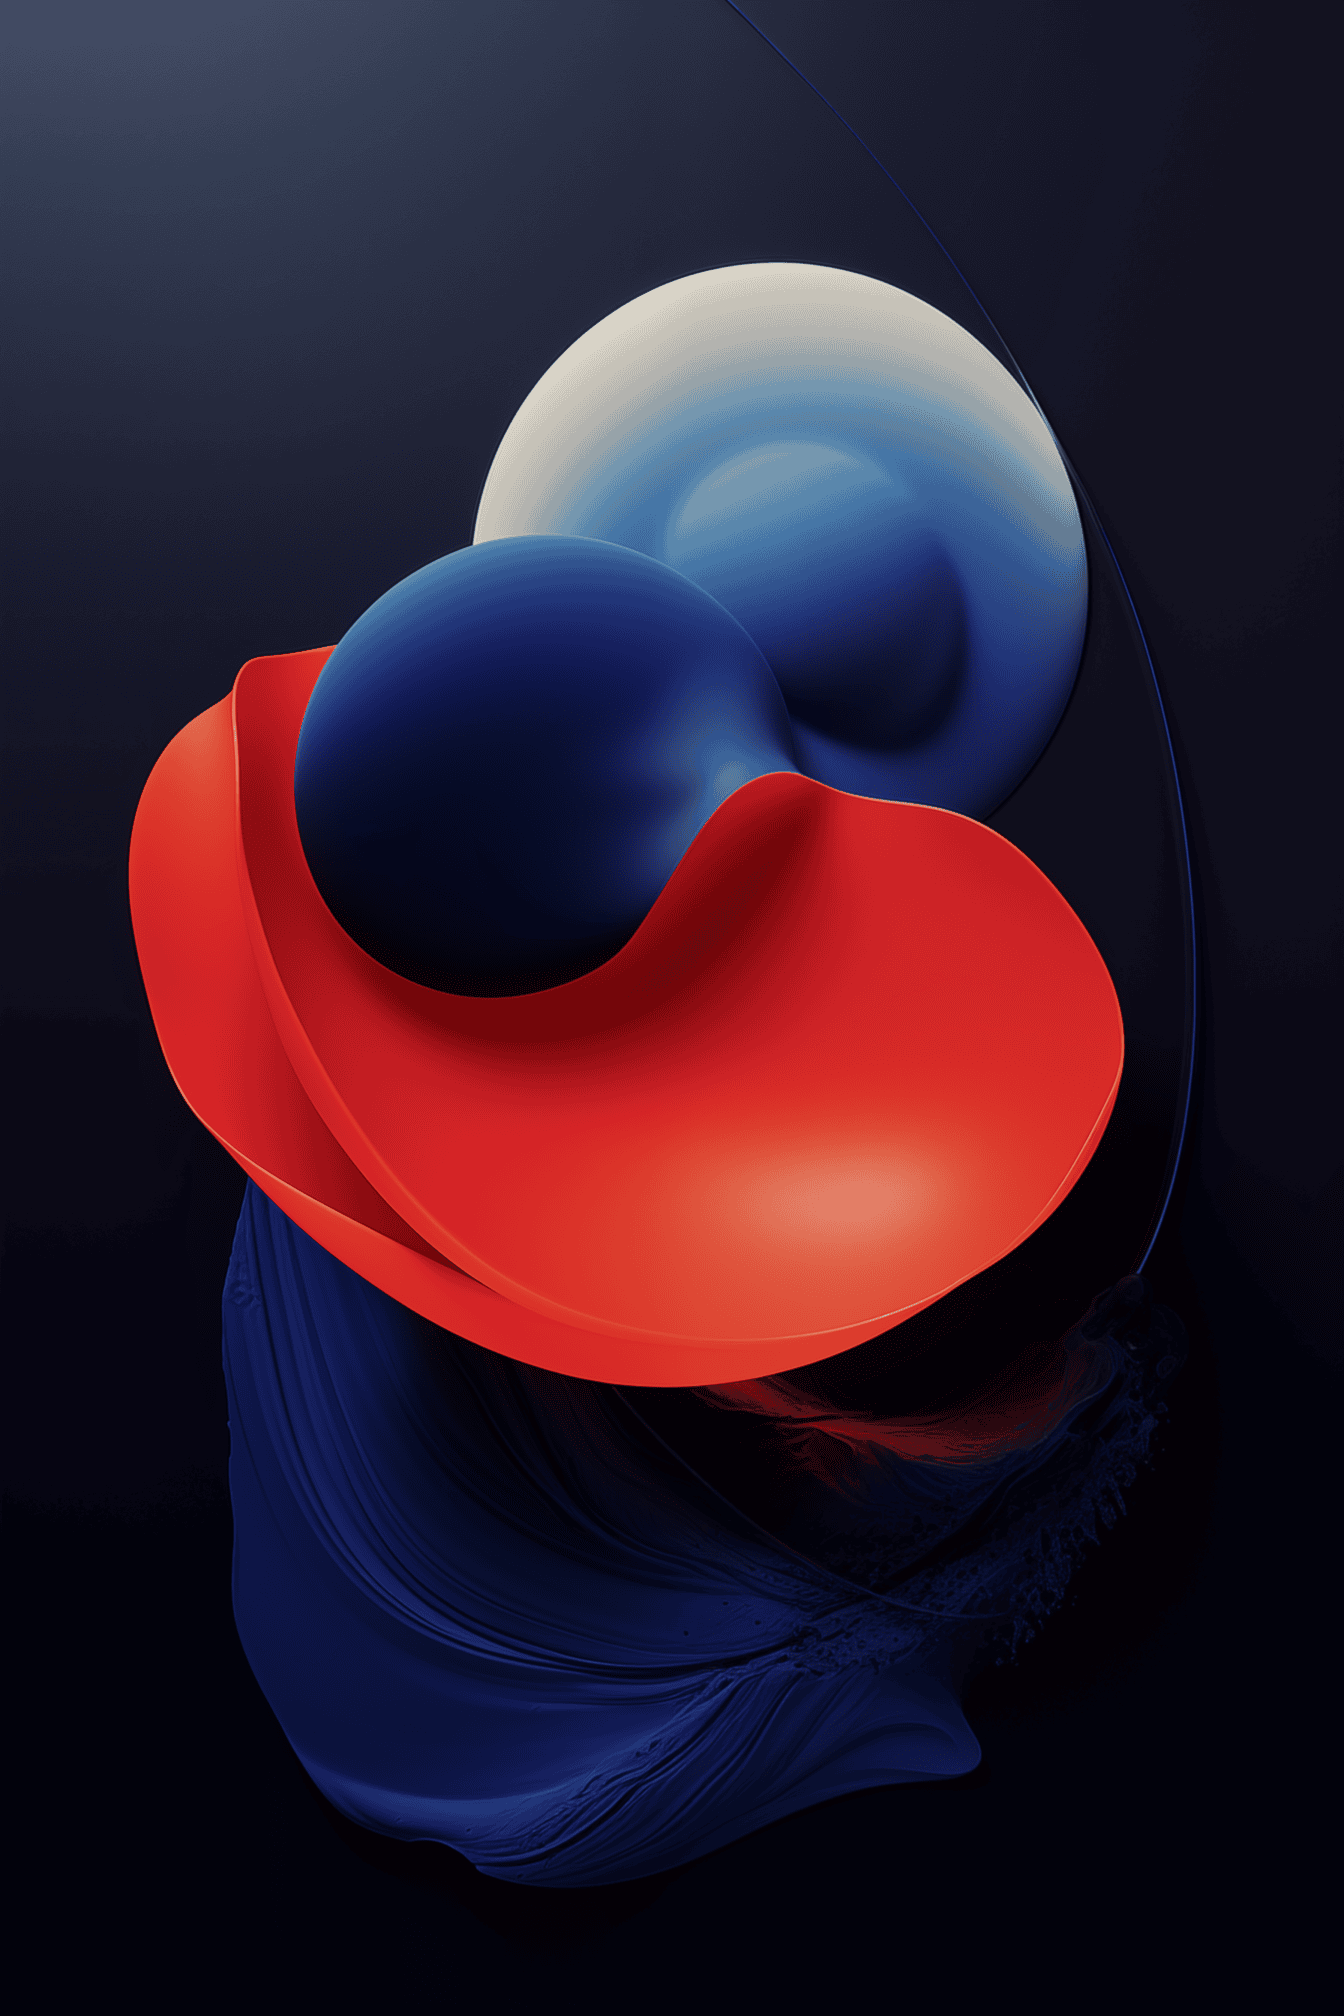 Tamnocrveni i plavi apstraktni oblici na tamnoj pozadini